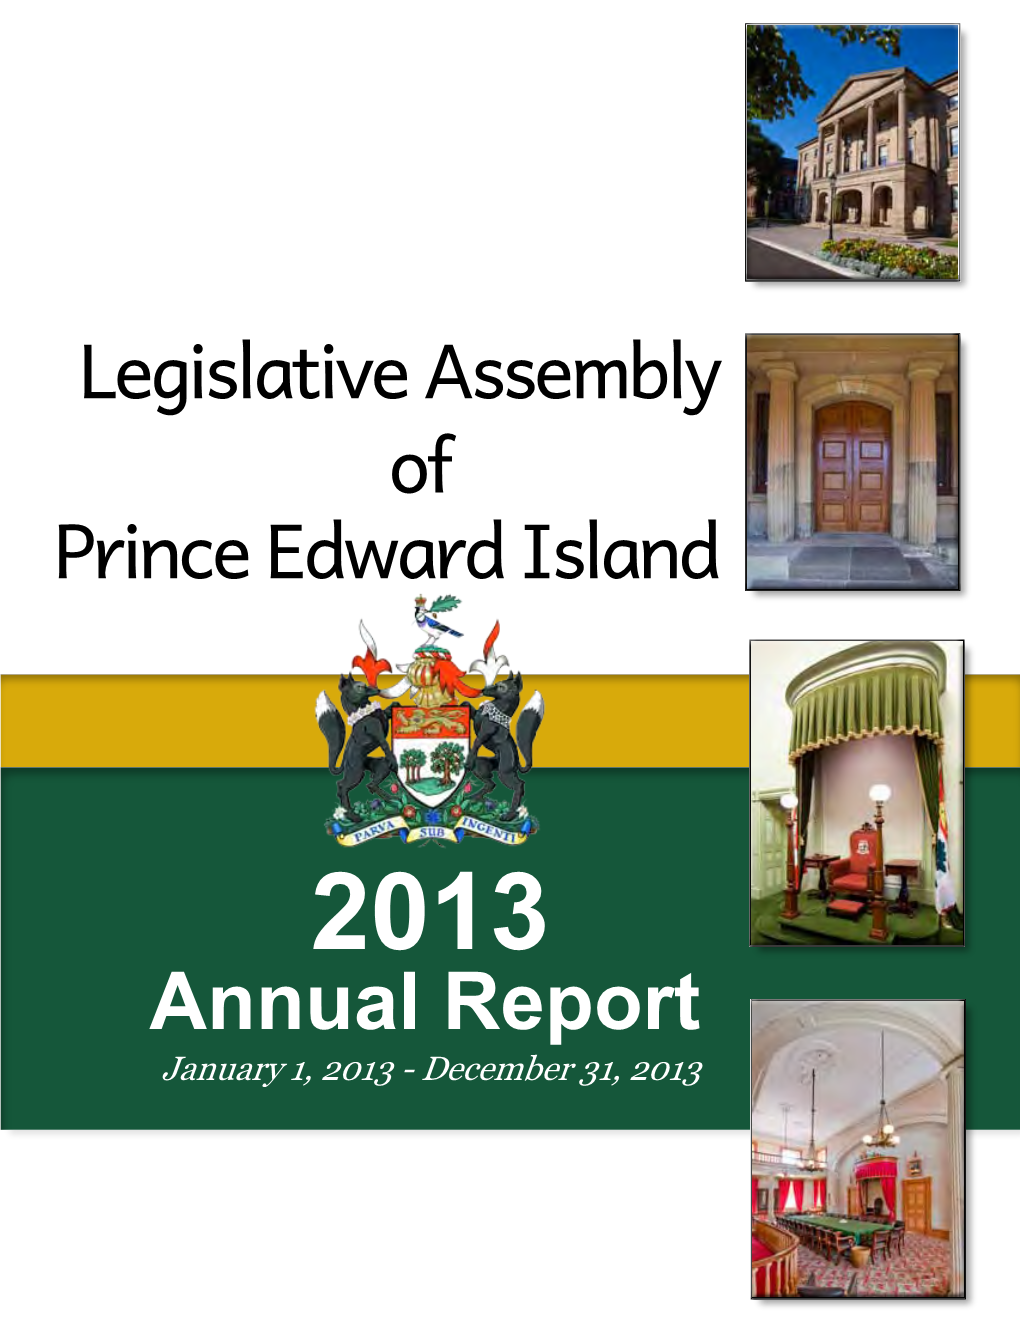 Annual Report January 1, 2013 - December 31, 2013 Letter from the Speaker